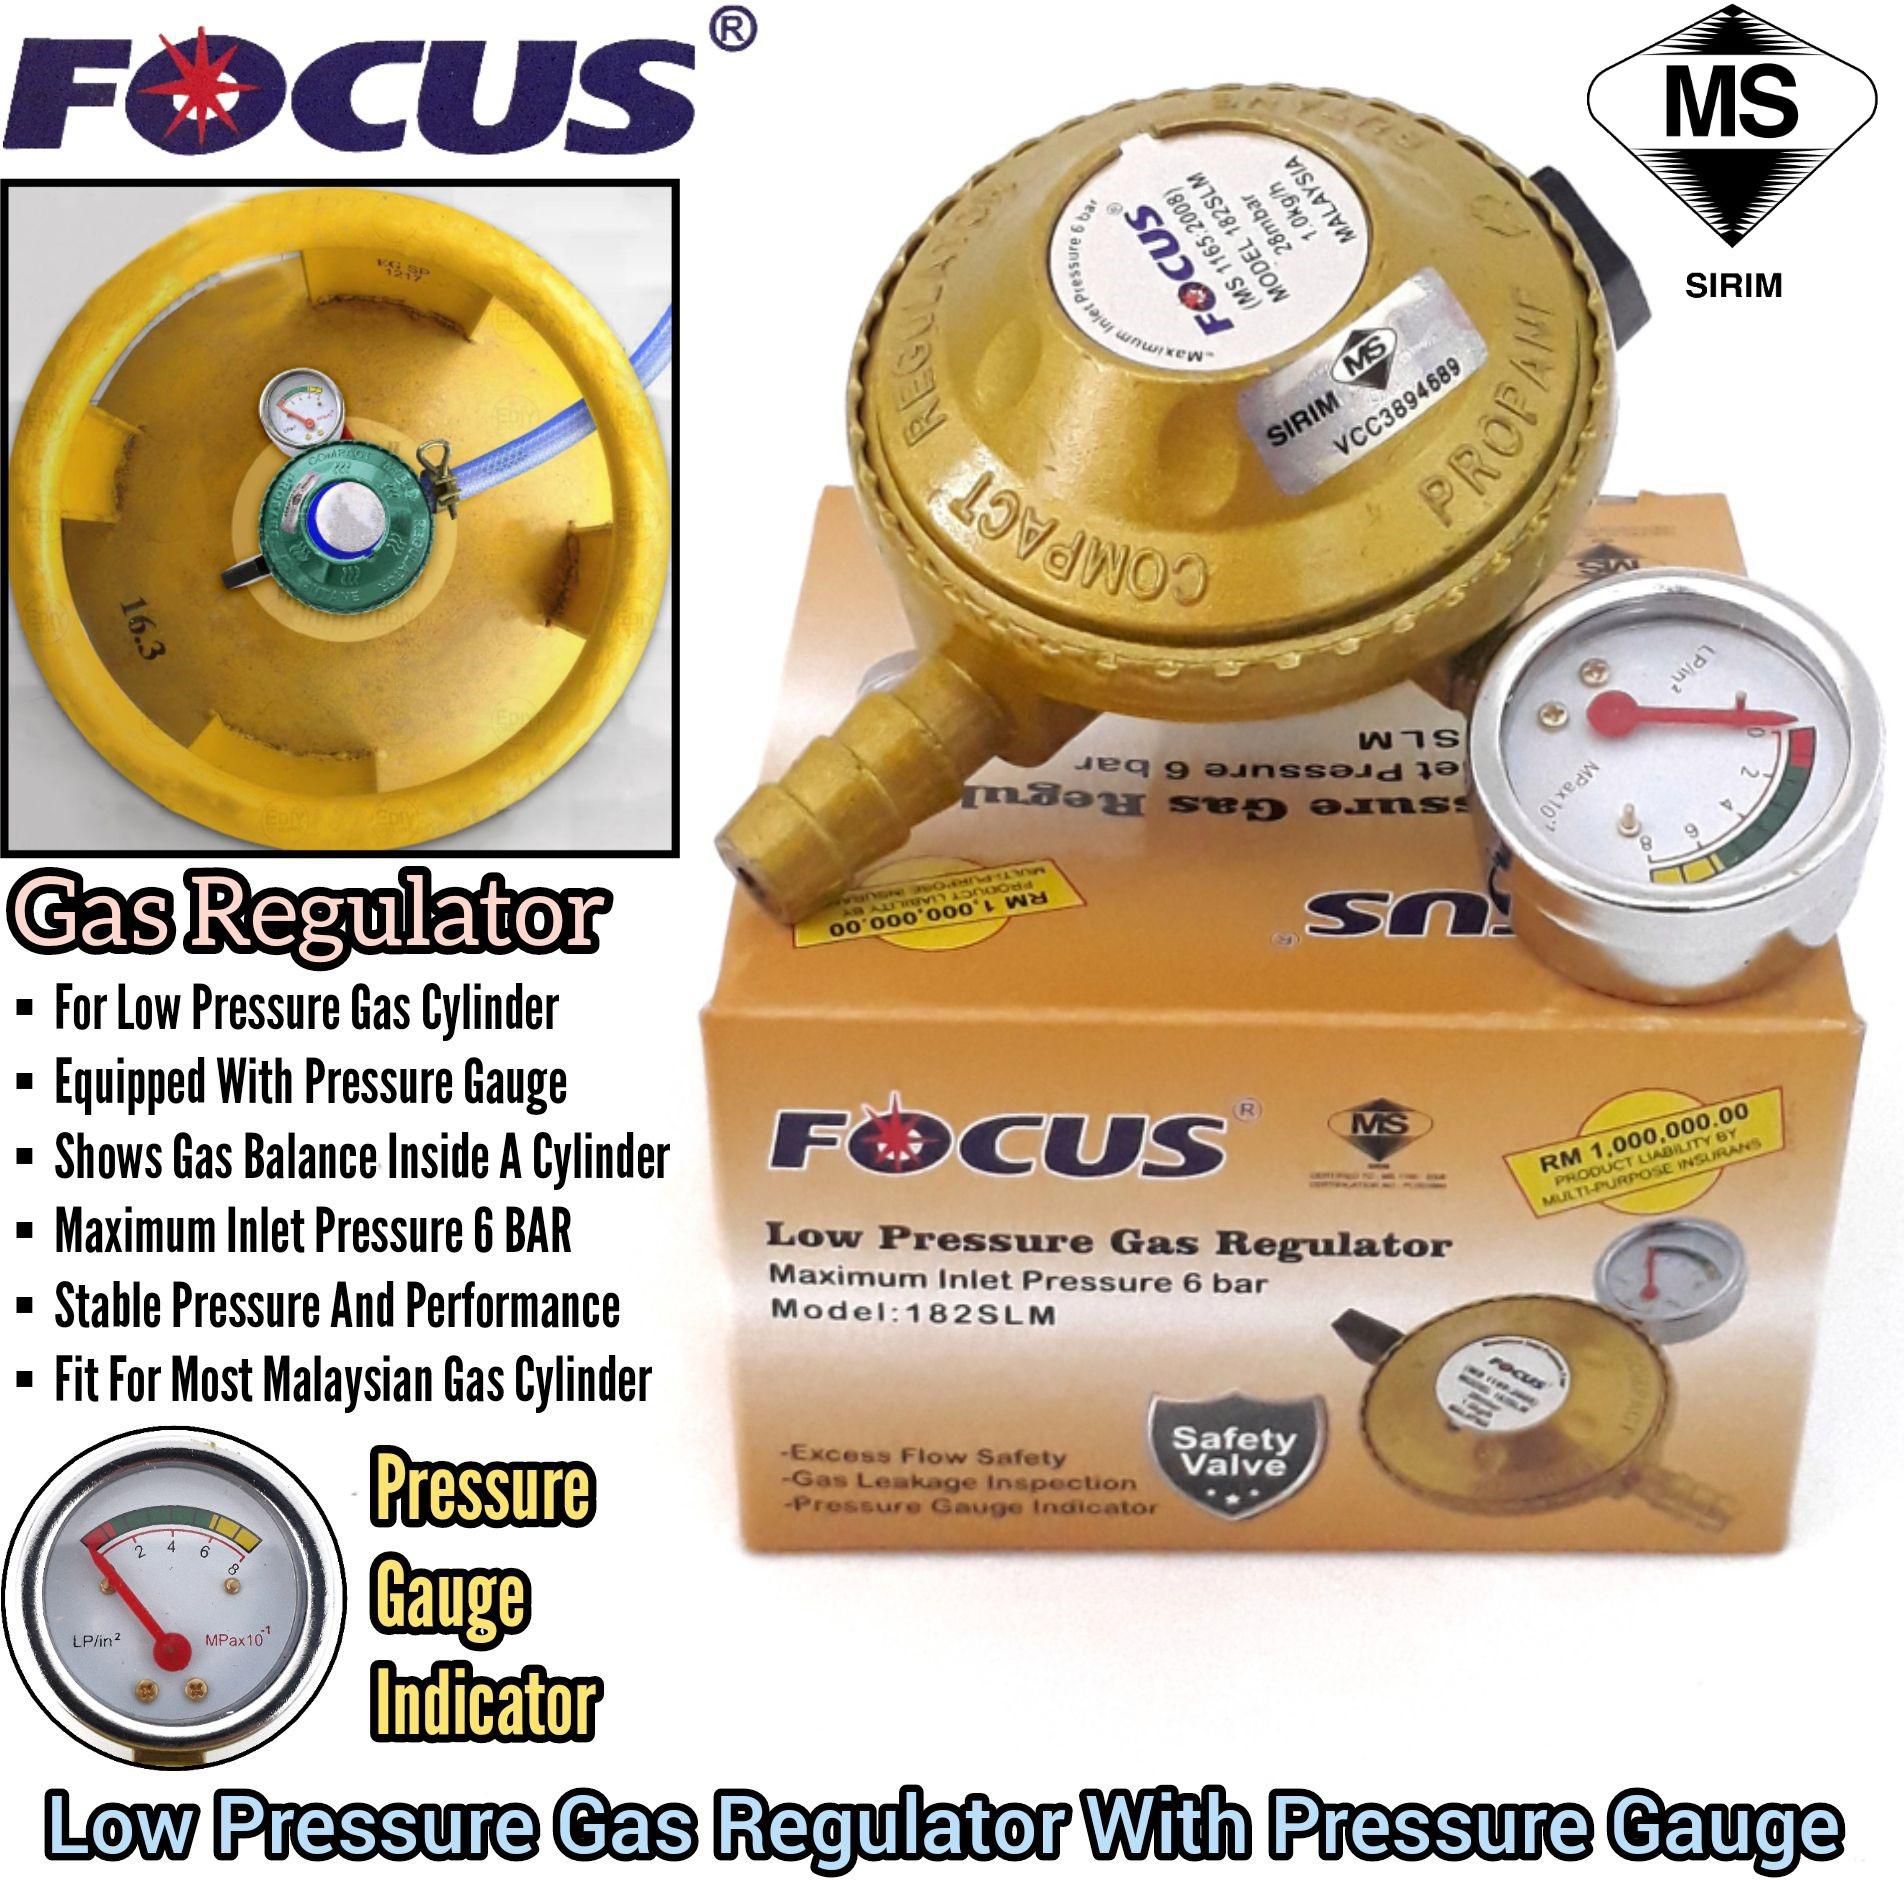 Focus Low Pressure Gas Regulator with Pressure Gauge Indicator